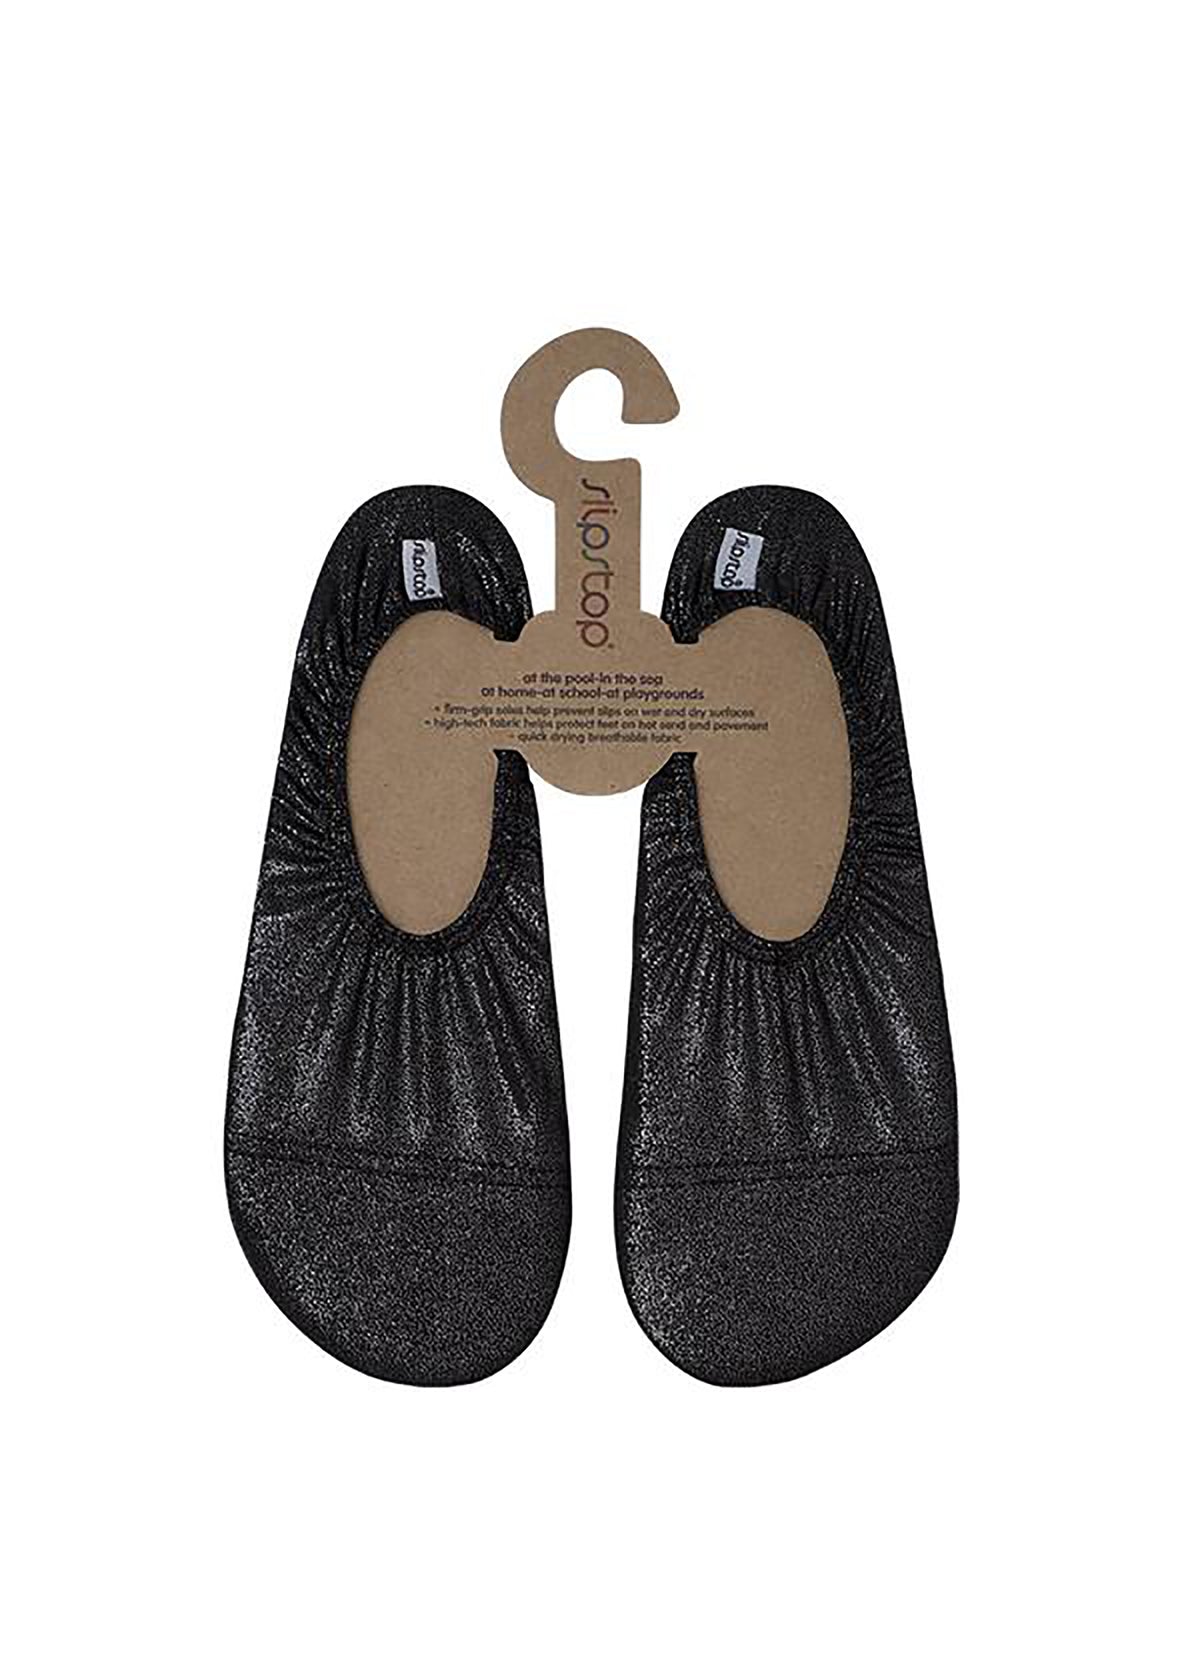 Adults' slippers - Black Gloss, shiny black